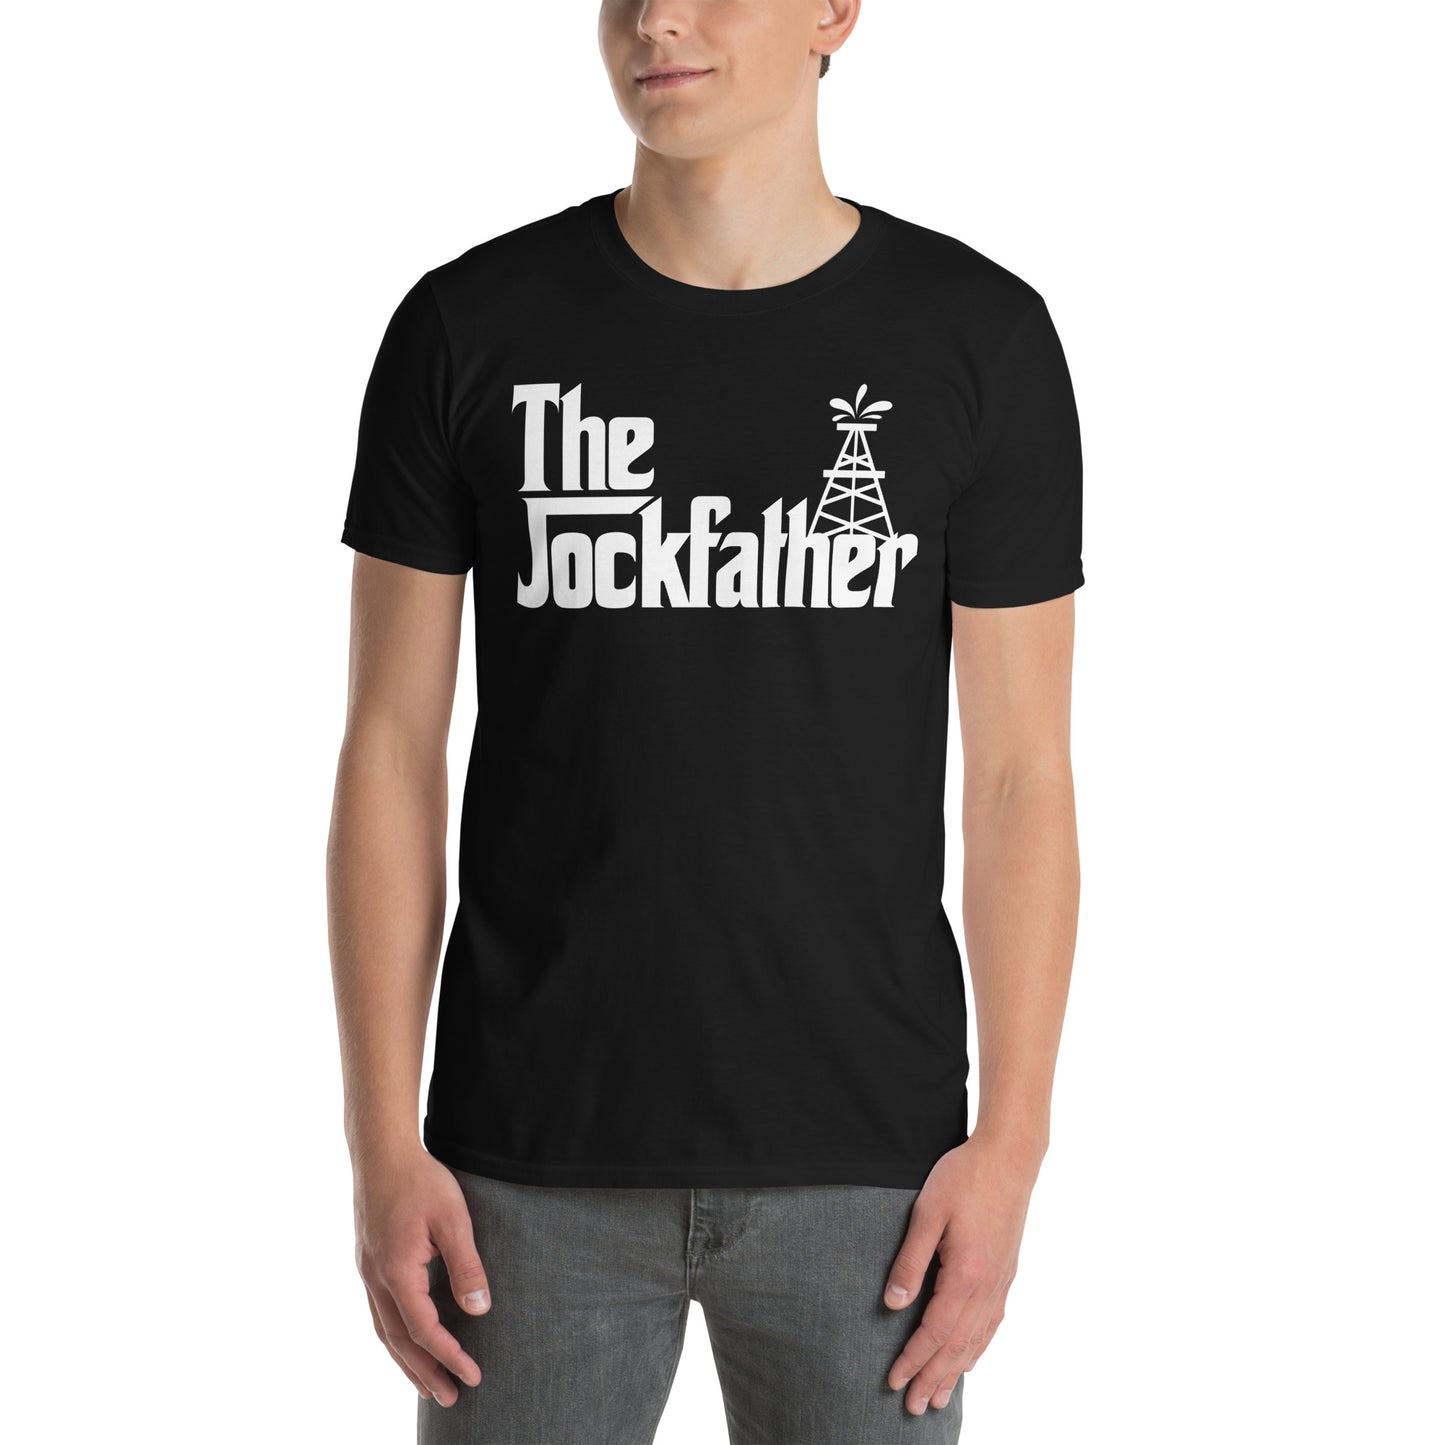 The Jockfather T-Shirt